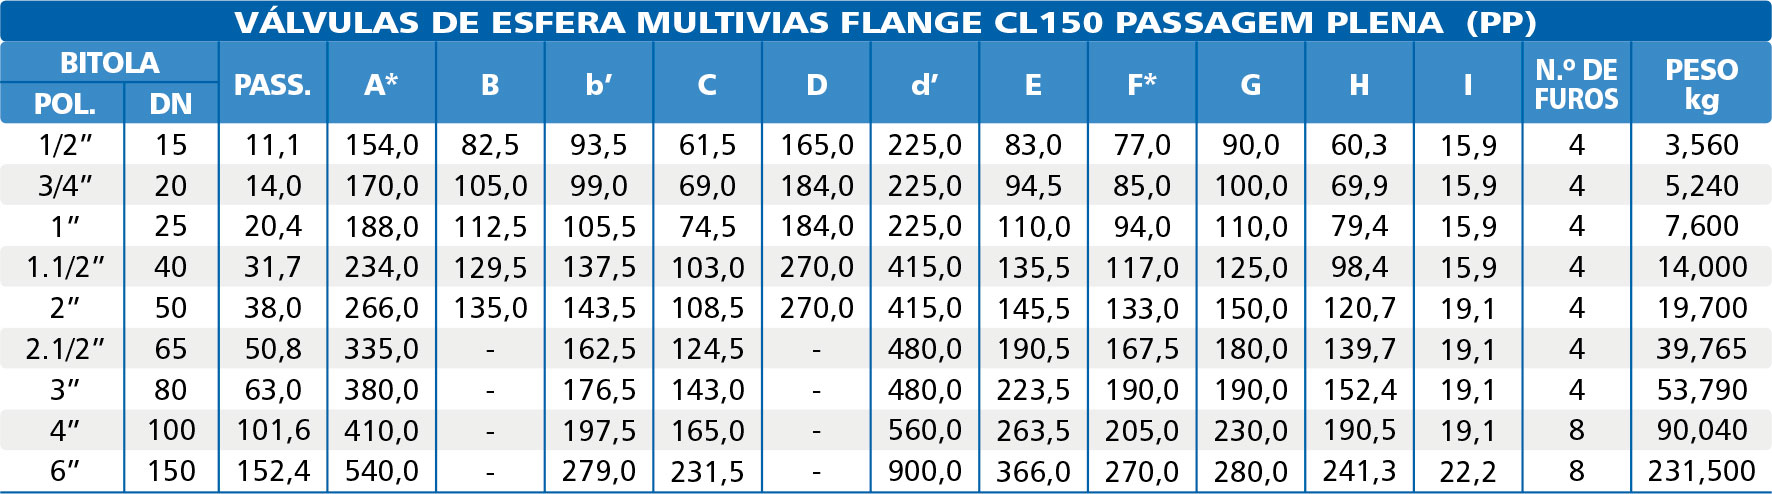 Valvula-de-Esfera-Direcional-Multivias-Flange-Classe-150-DIN-Plena-tabela